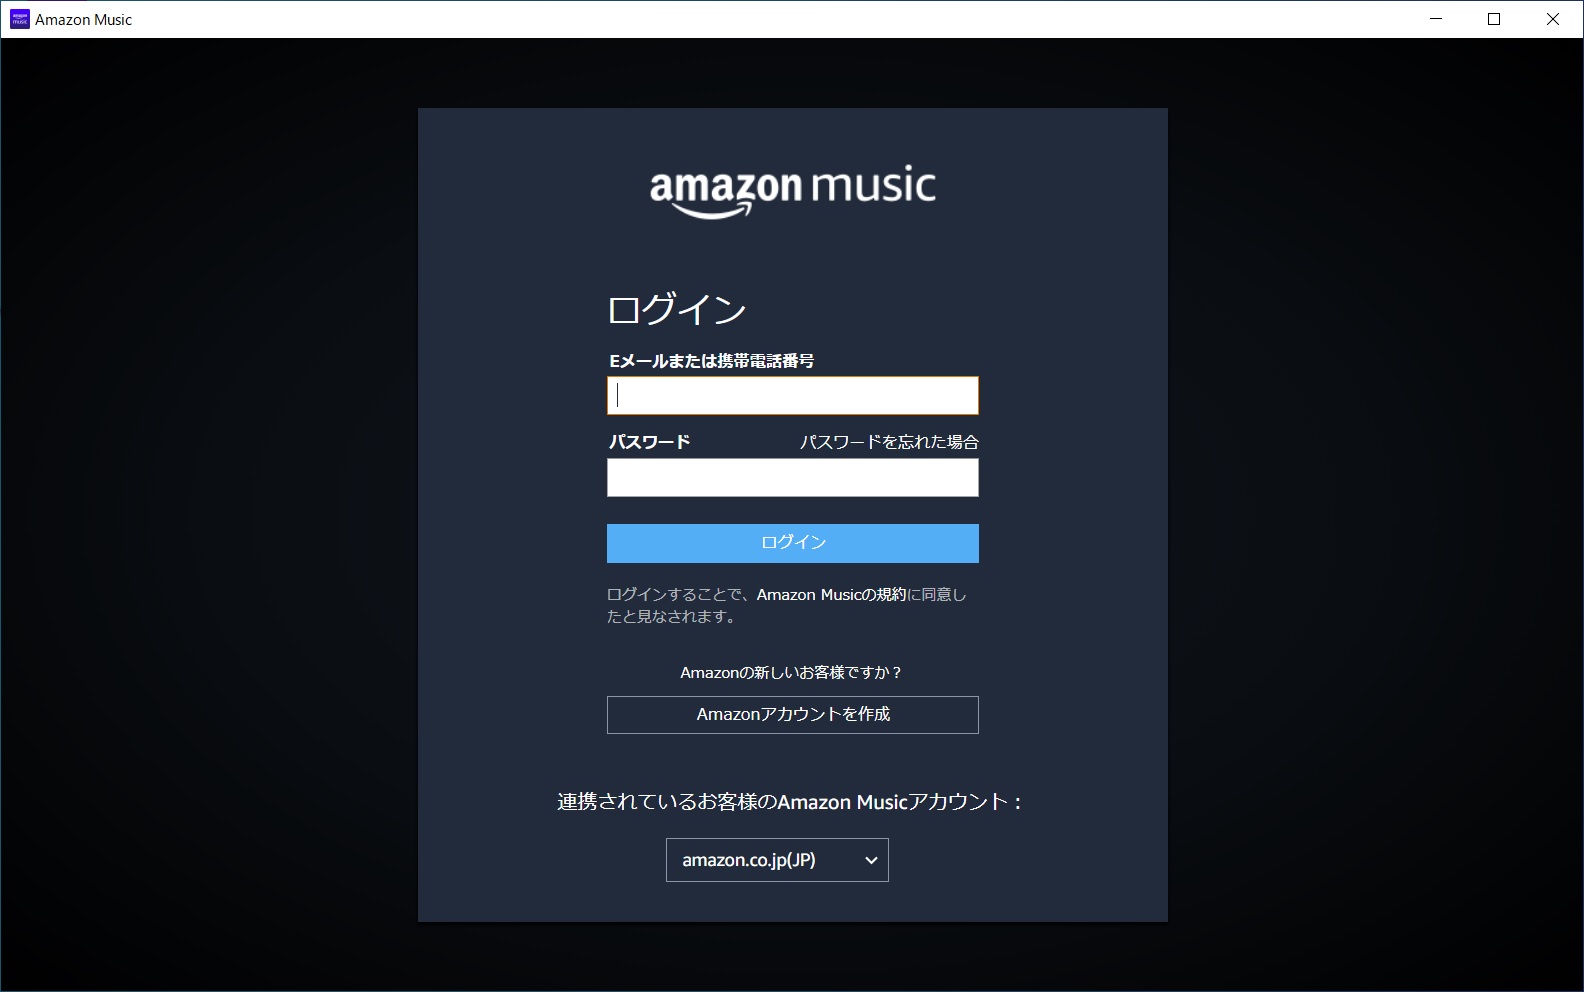 Amazon Music Unlimited　3か月無料